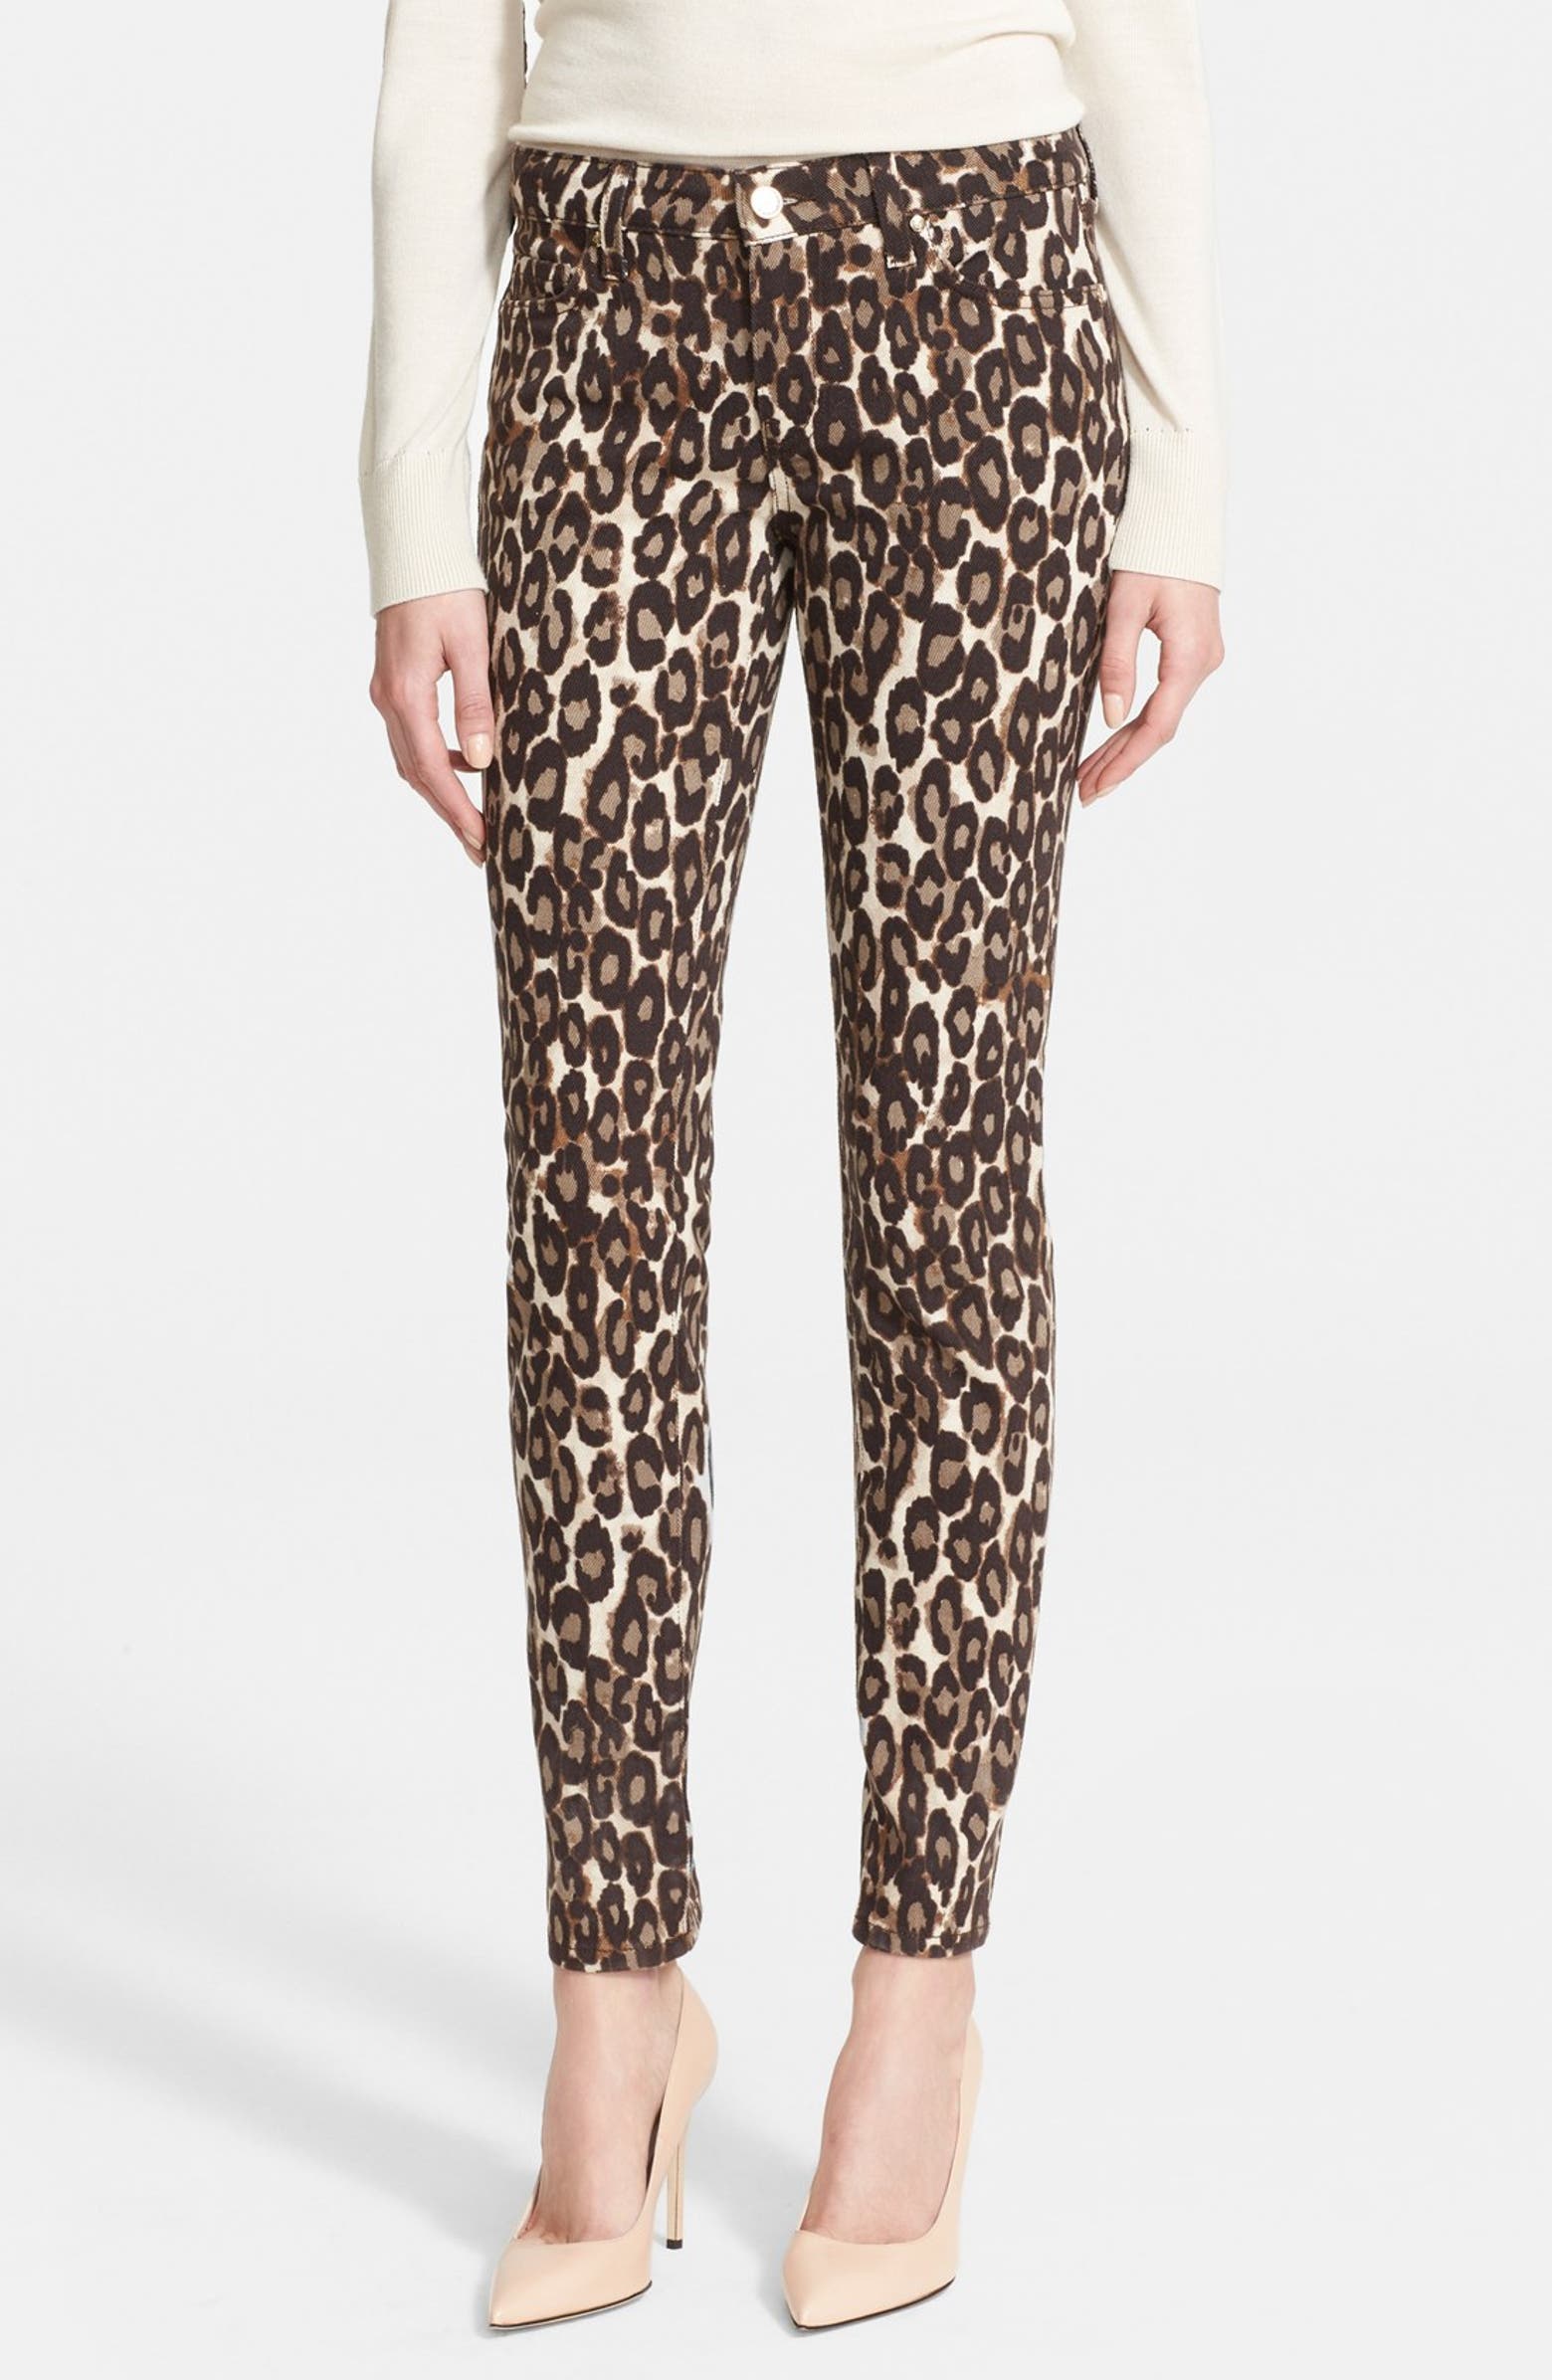 kate spade new york 'broome street' leopard print jeans | Nordstrom